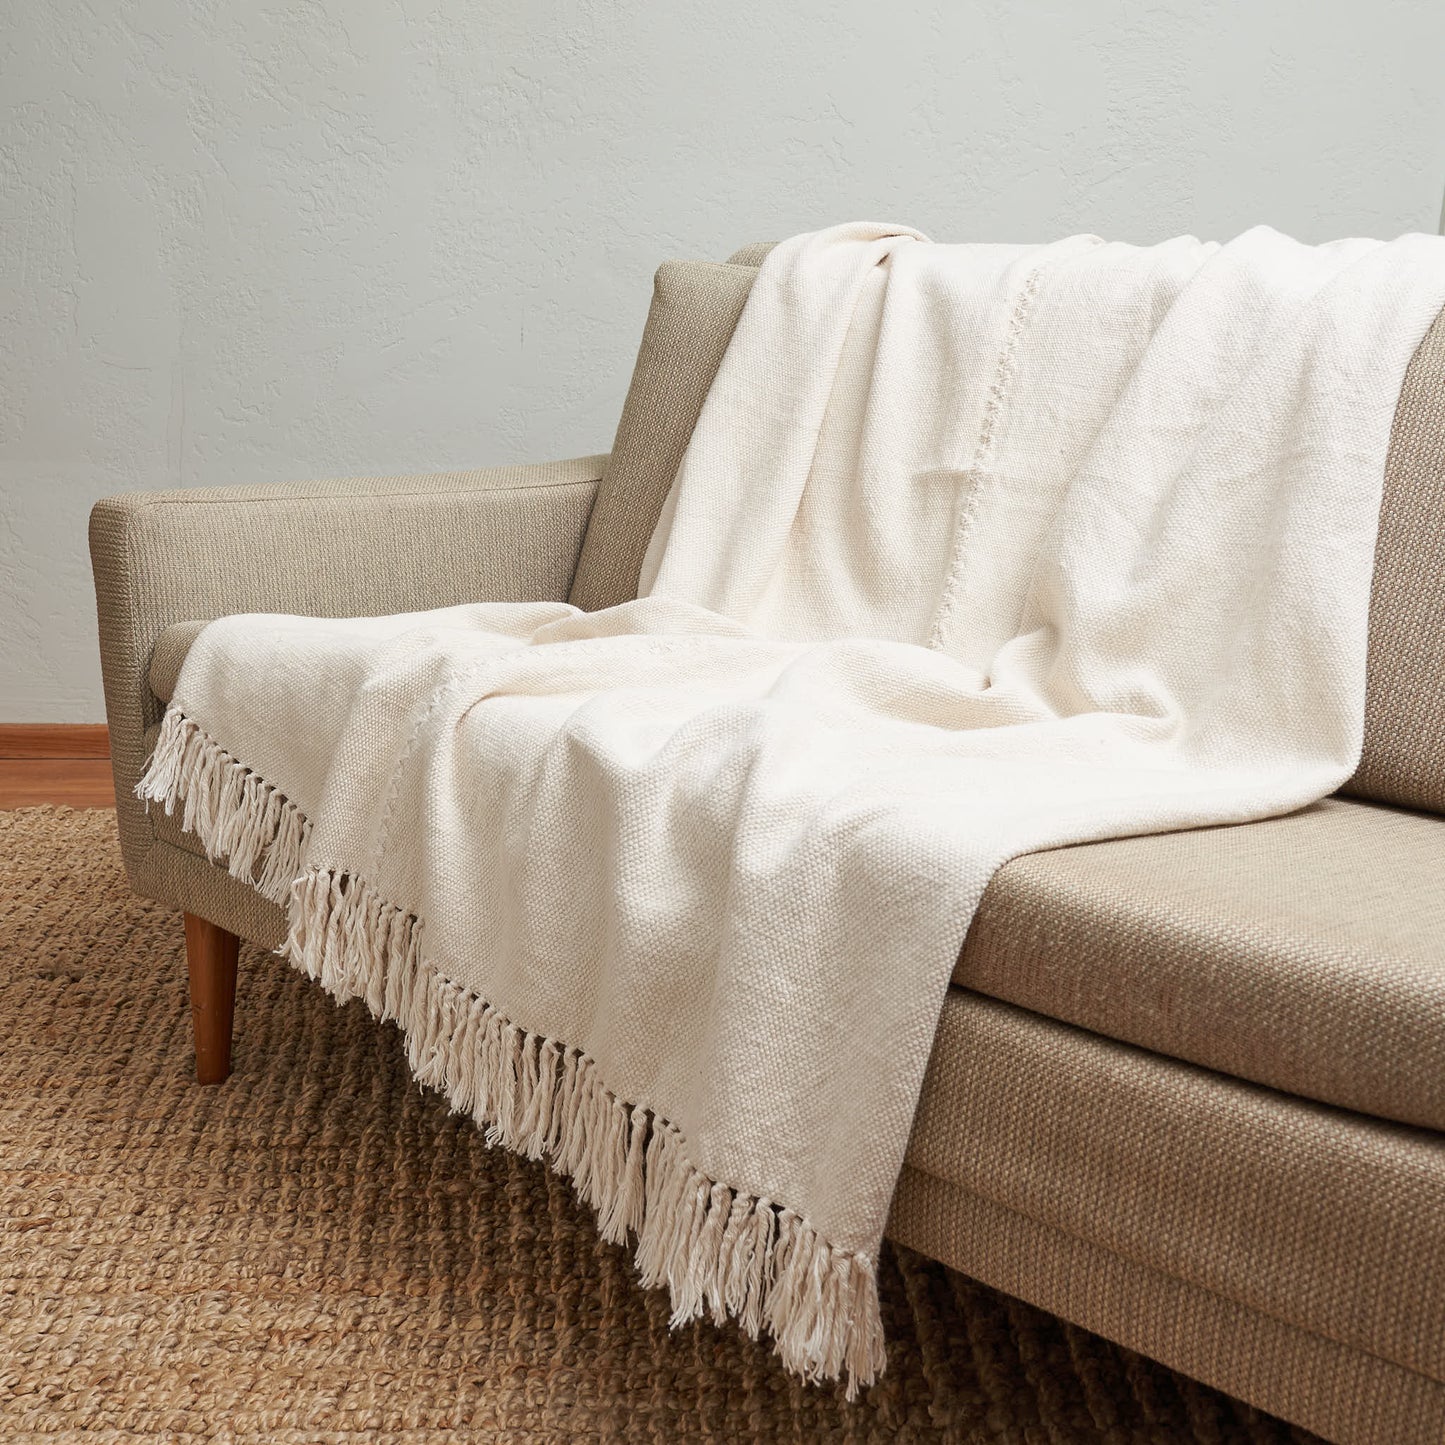 Handwoven Organic Cotton Throw Blanket, Undyed Cream